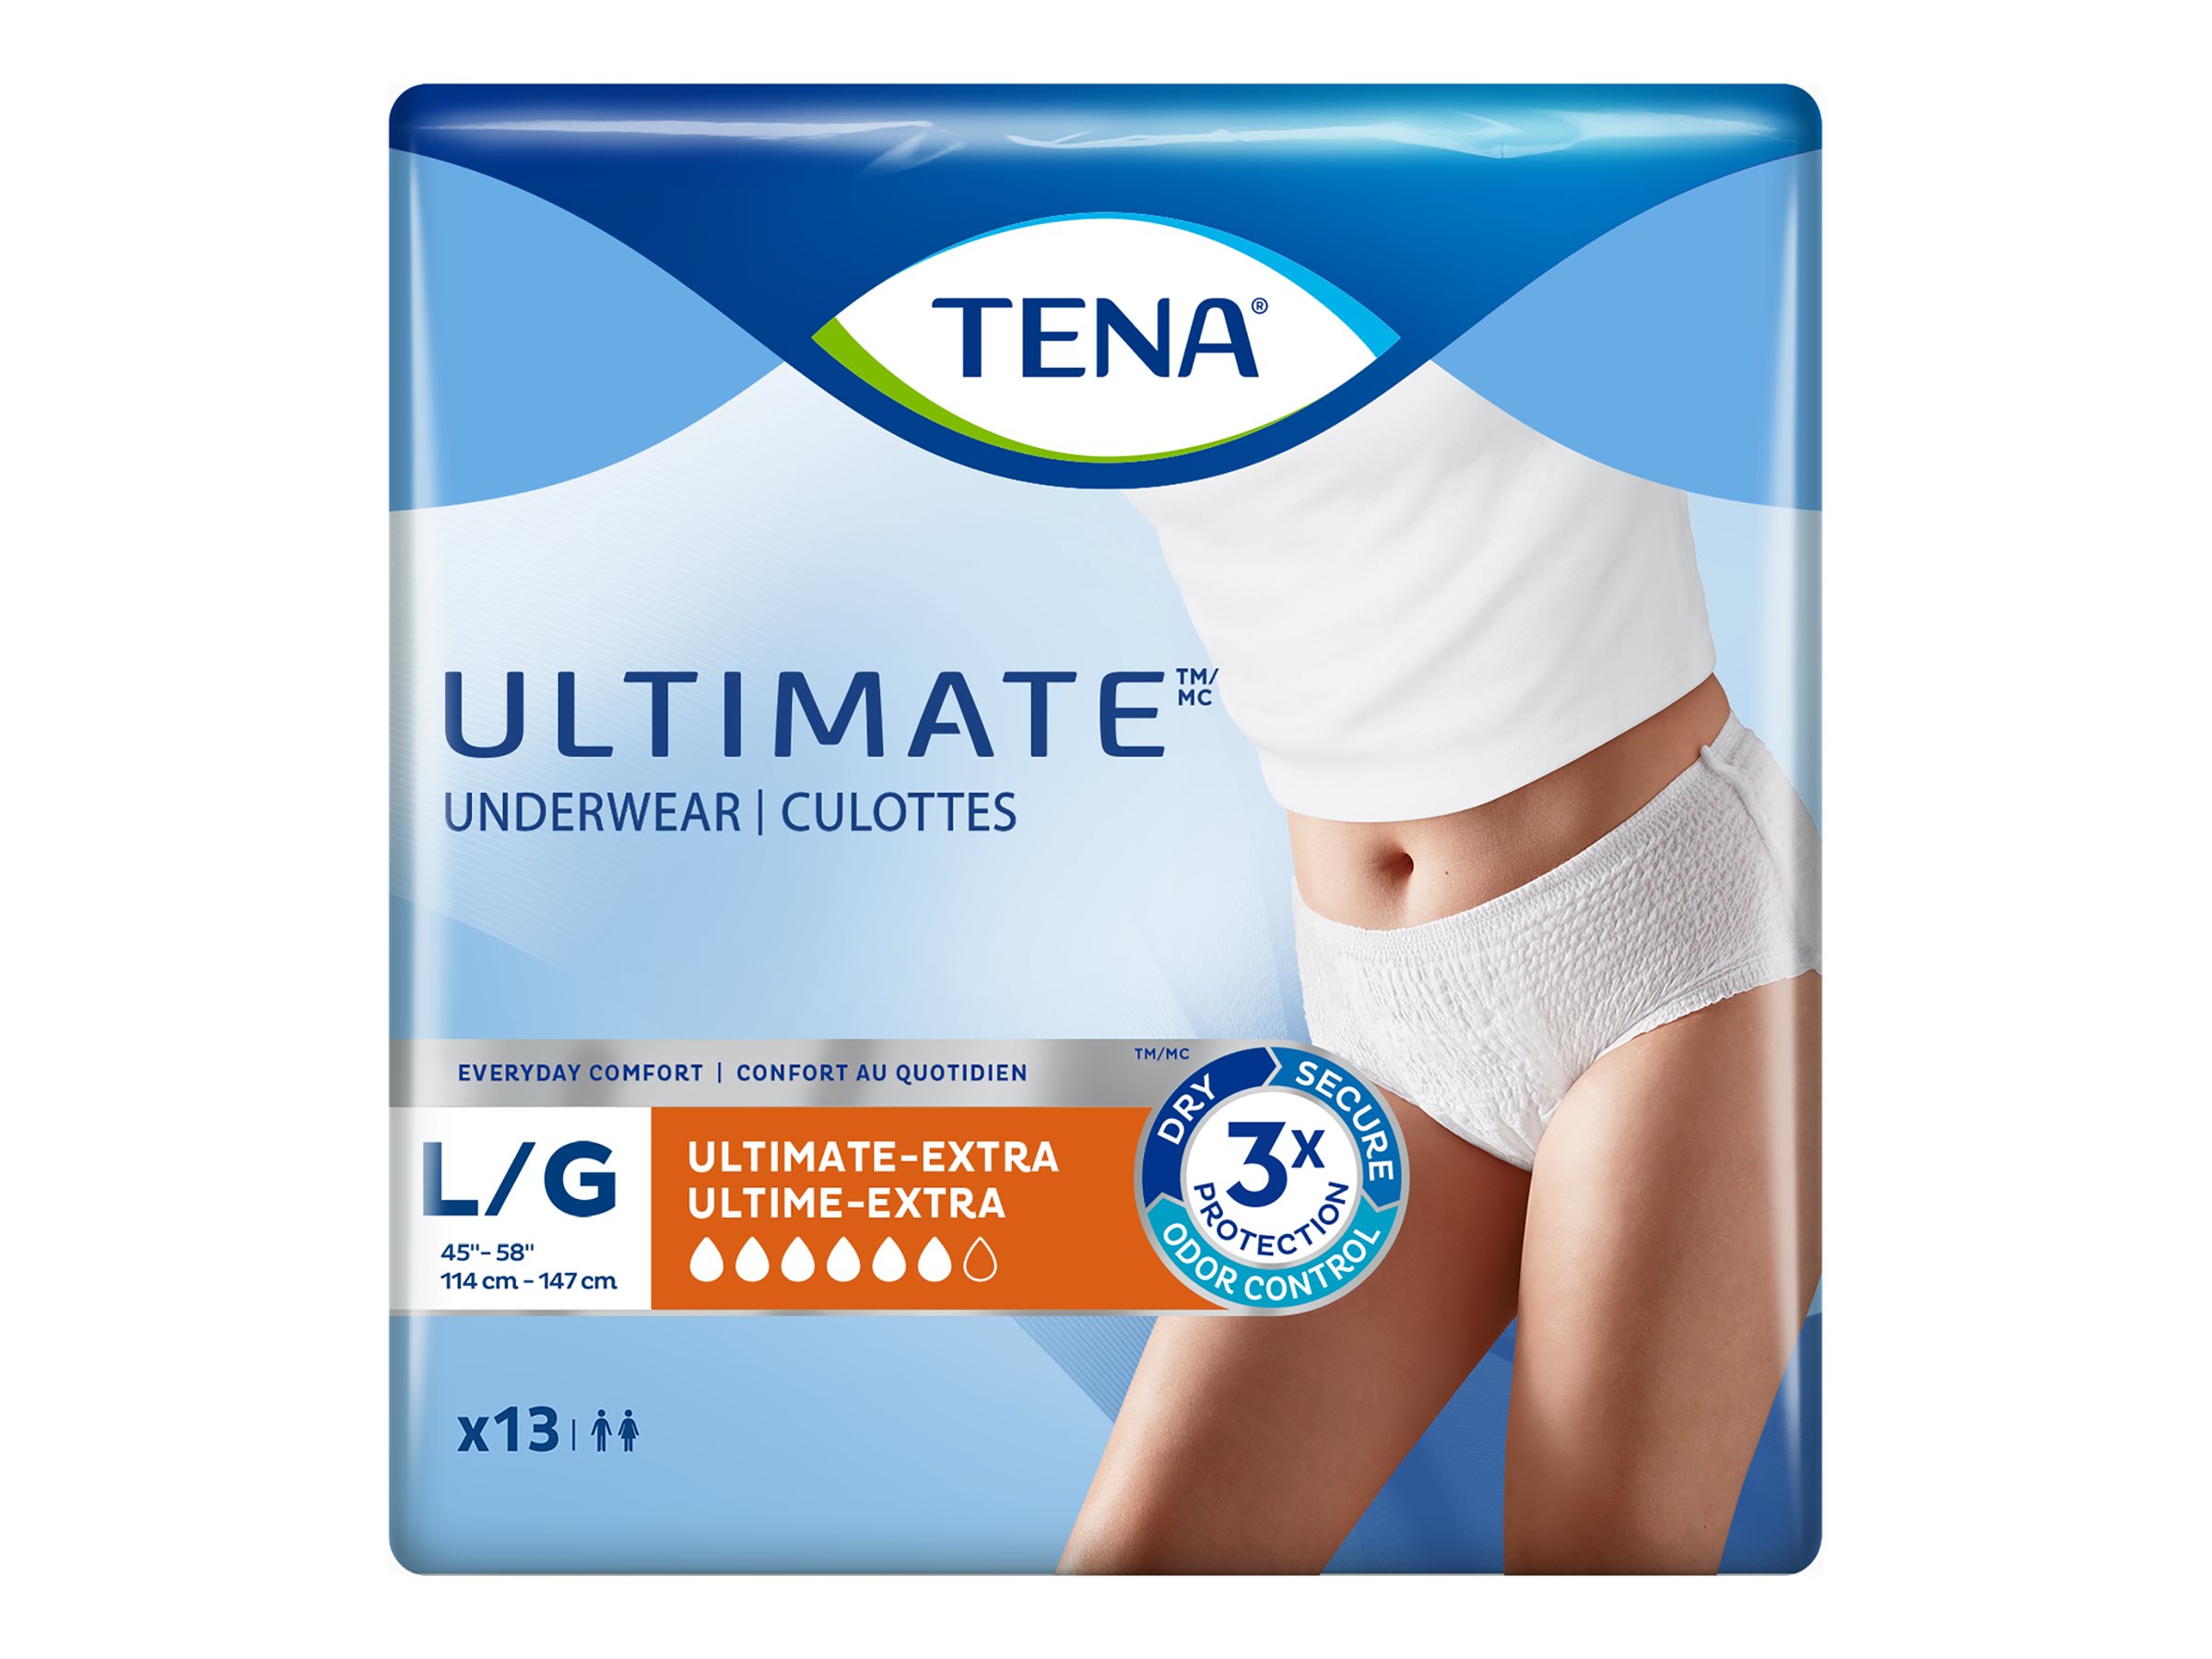 TENA Women's Incontinence Underwear at